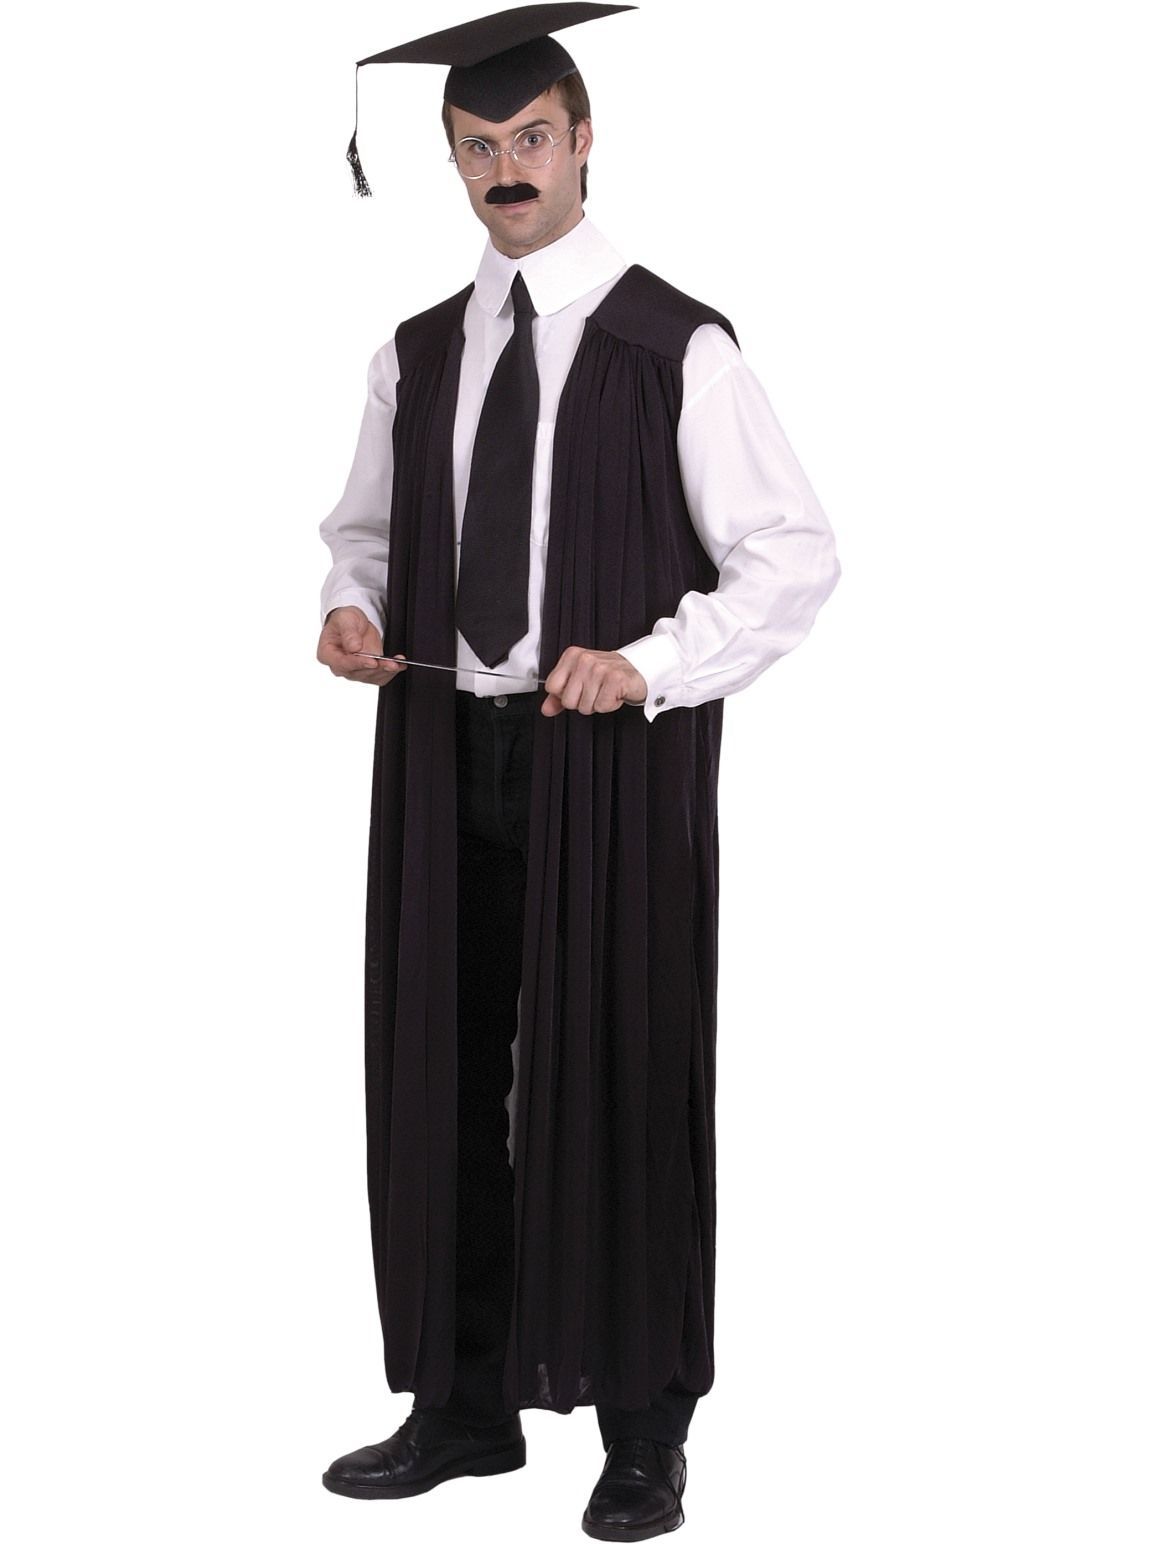 Costume Adult Teachers Gown Black